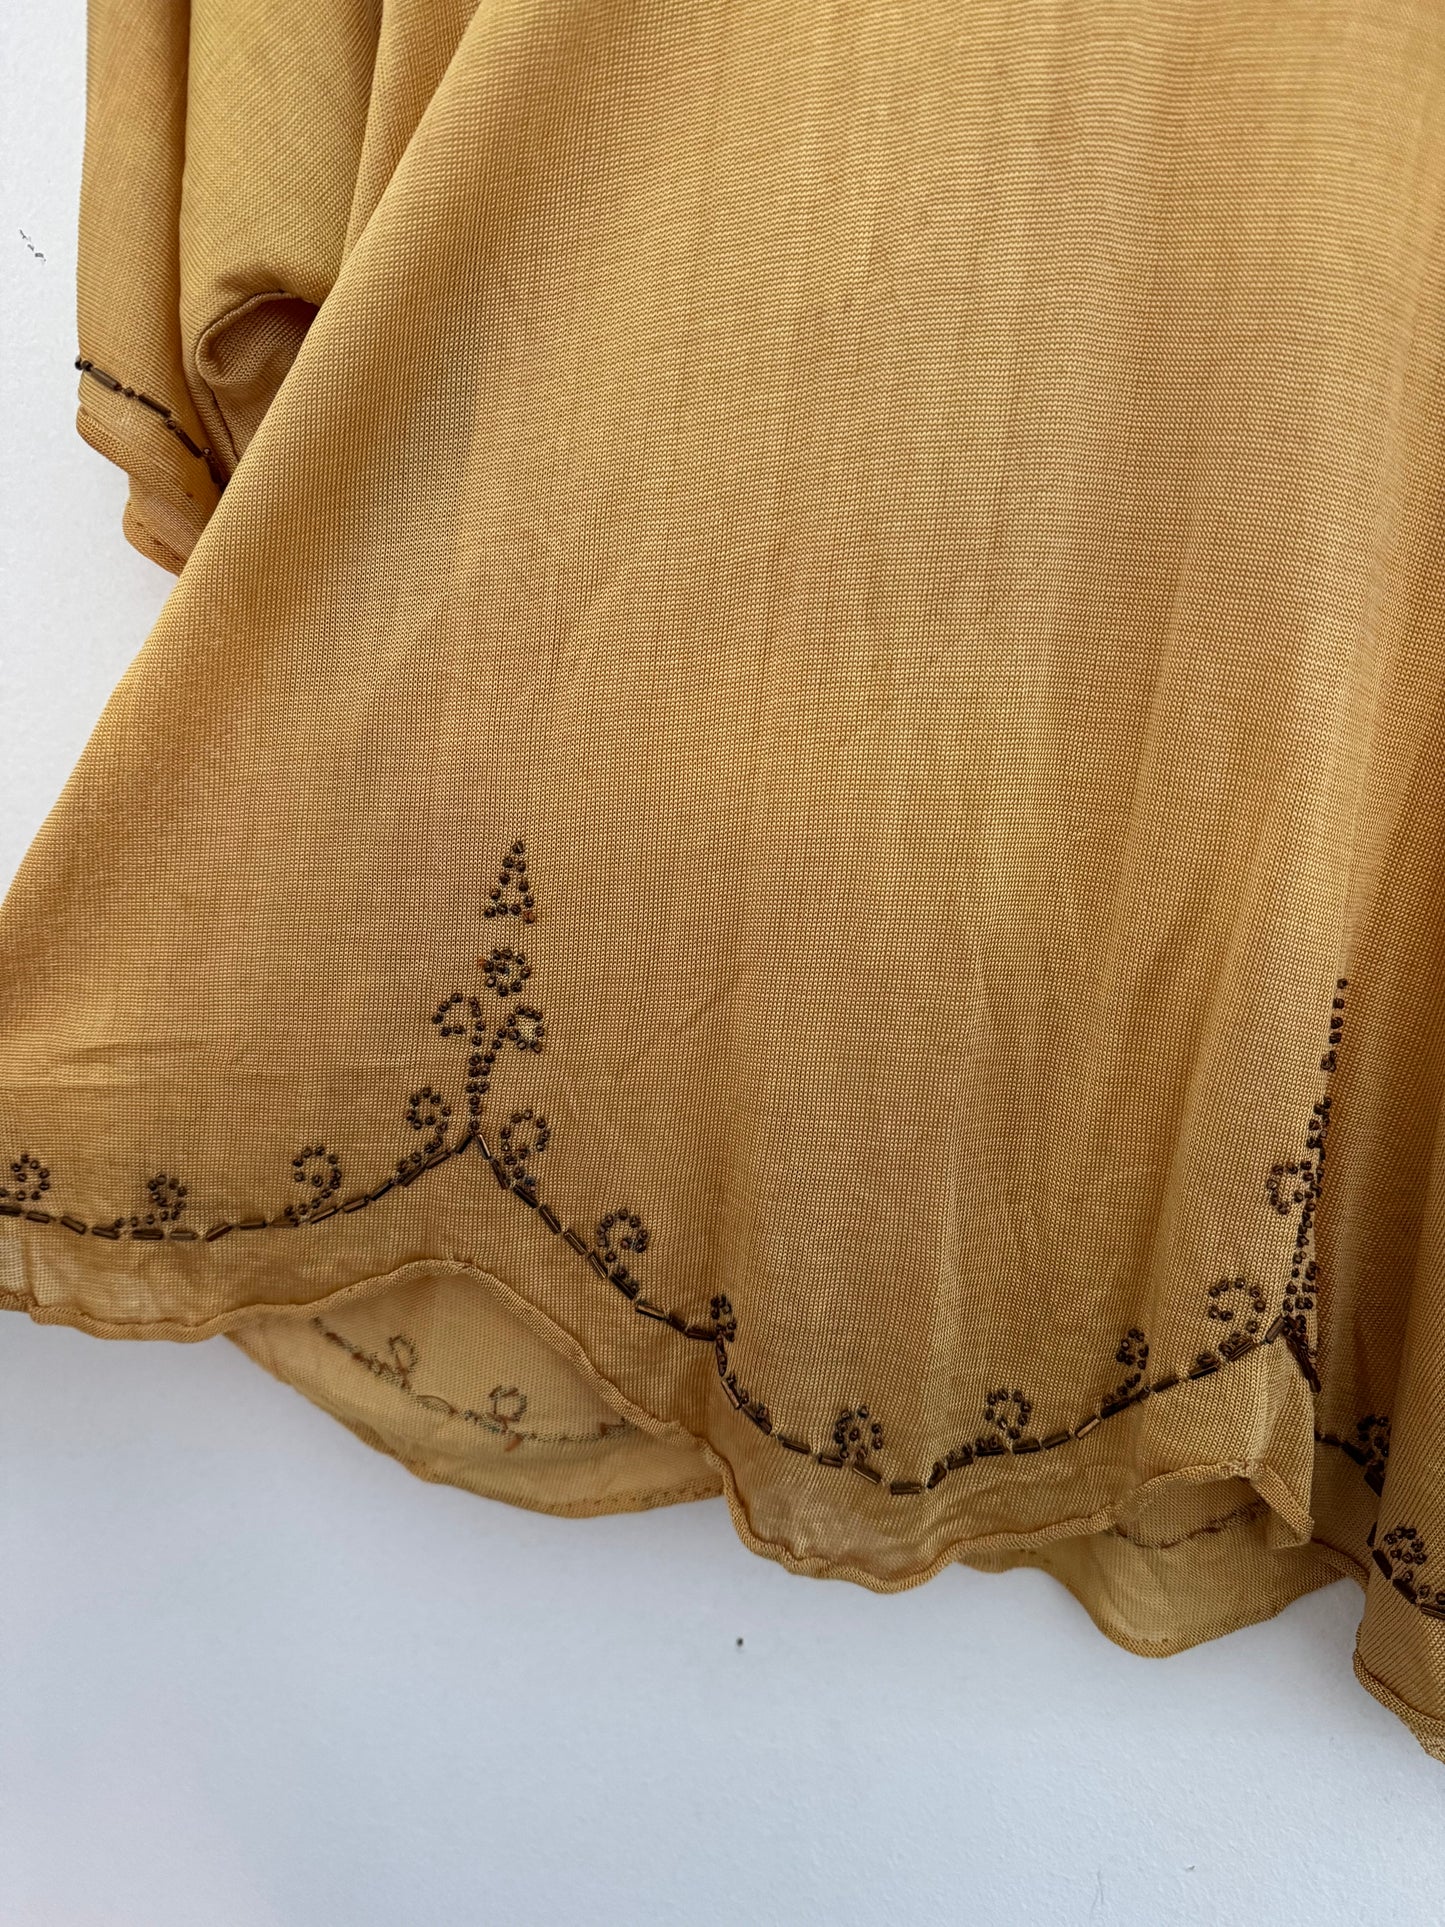 1920s Mustard Silk Jersey Knit Beaded Blouse w/ Tasseled Sash- M/L